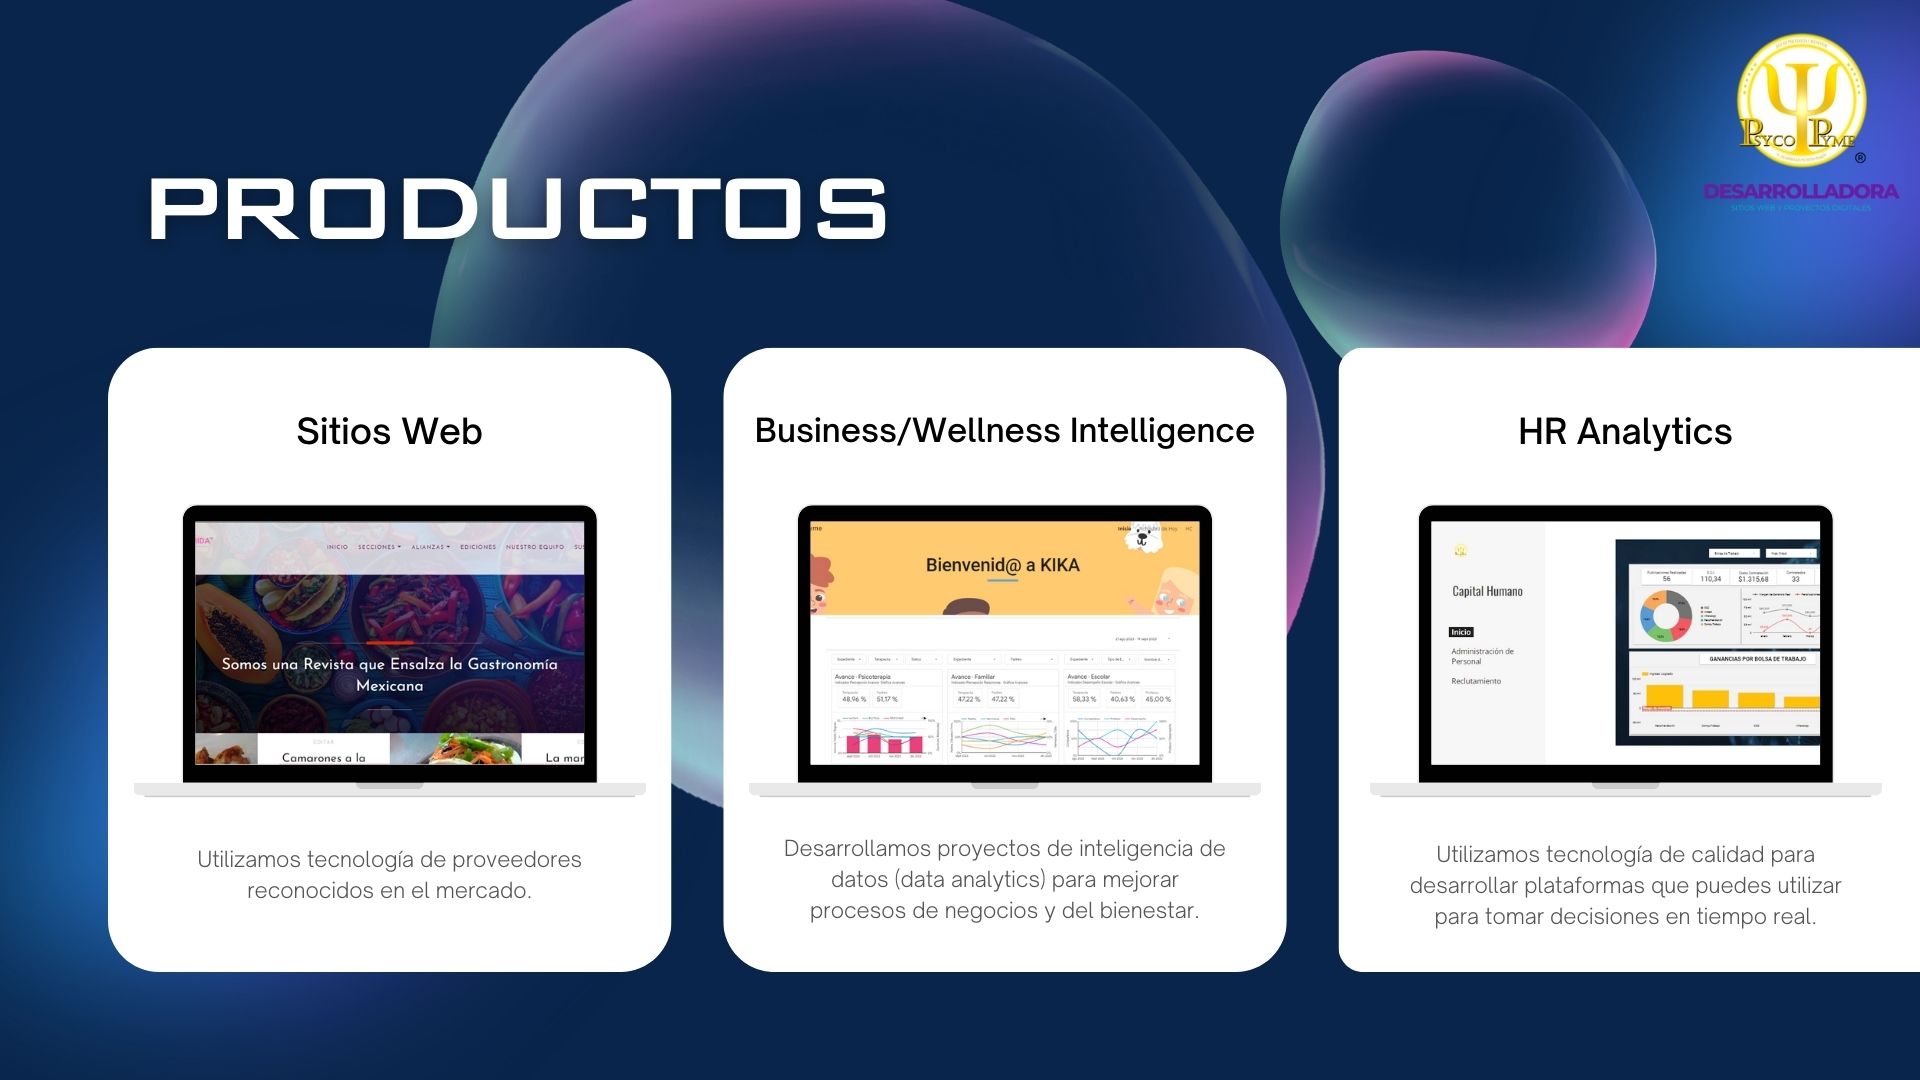 PRODUCTOS

Sitios Web Business/Wellness Intelligence HR Analytics